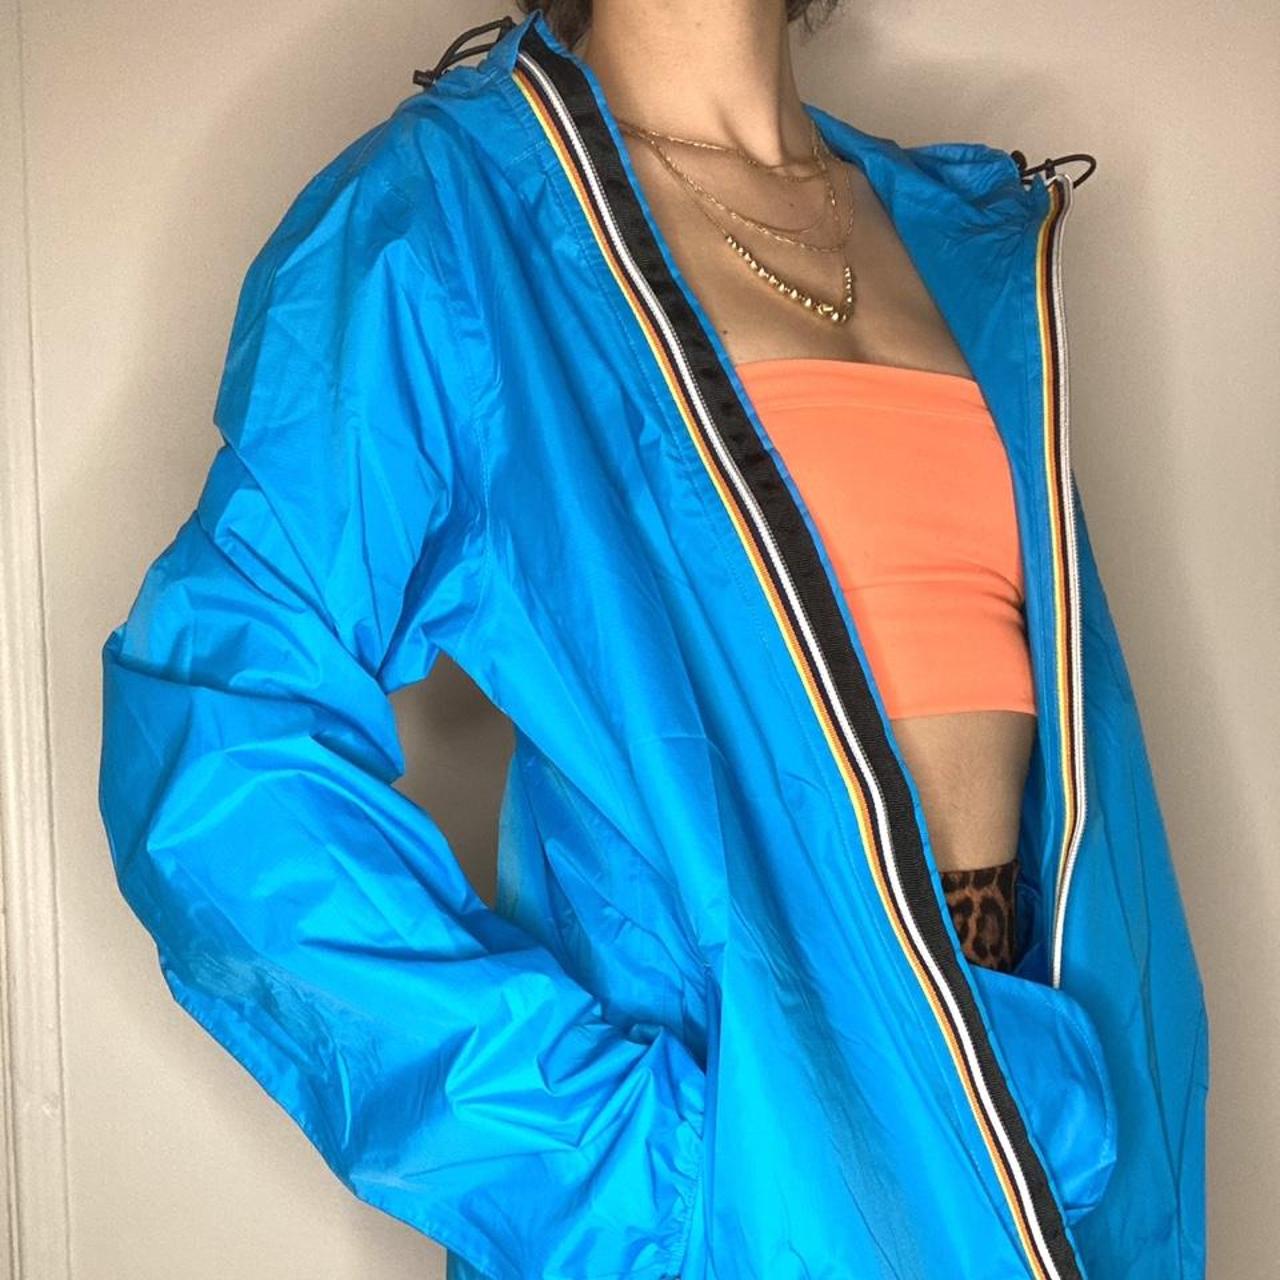 Product Image 1 - PRODUCT: Rain jacket 
BRAND: K-way
COLOR: